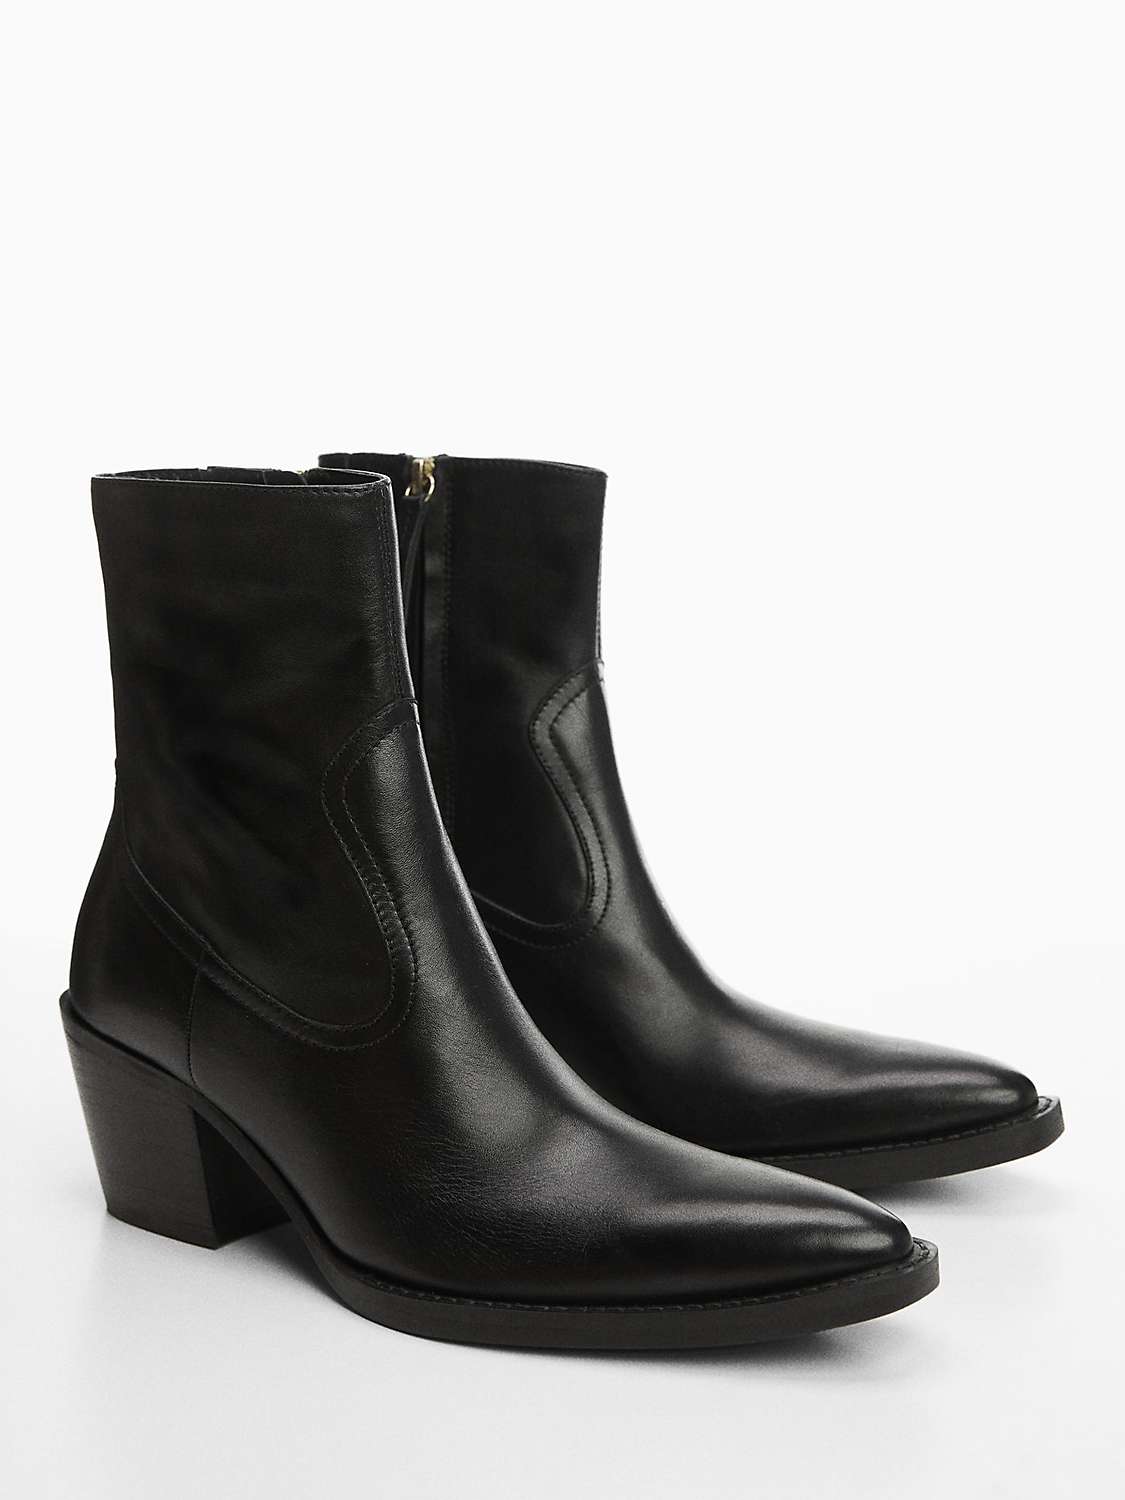 Buy Mango Coa Leather Cowboy Boots, Black Online at johnlewis.com